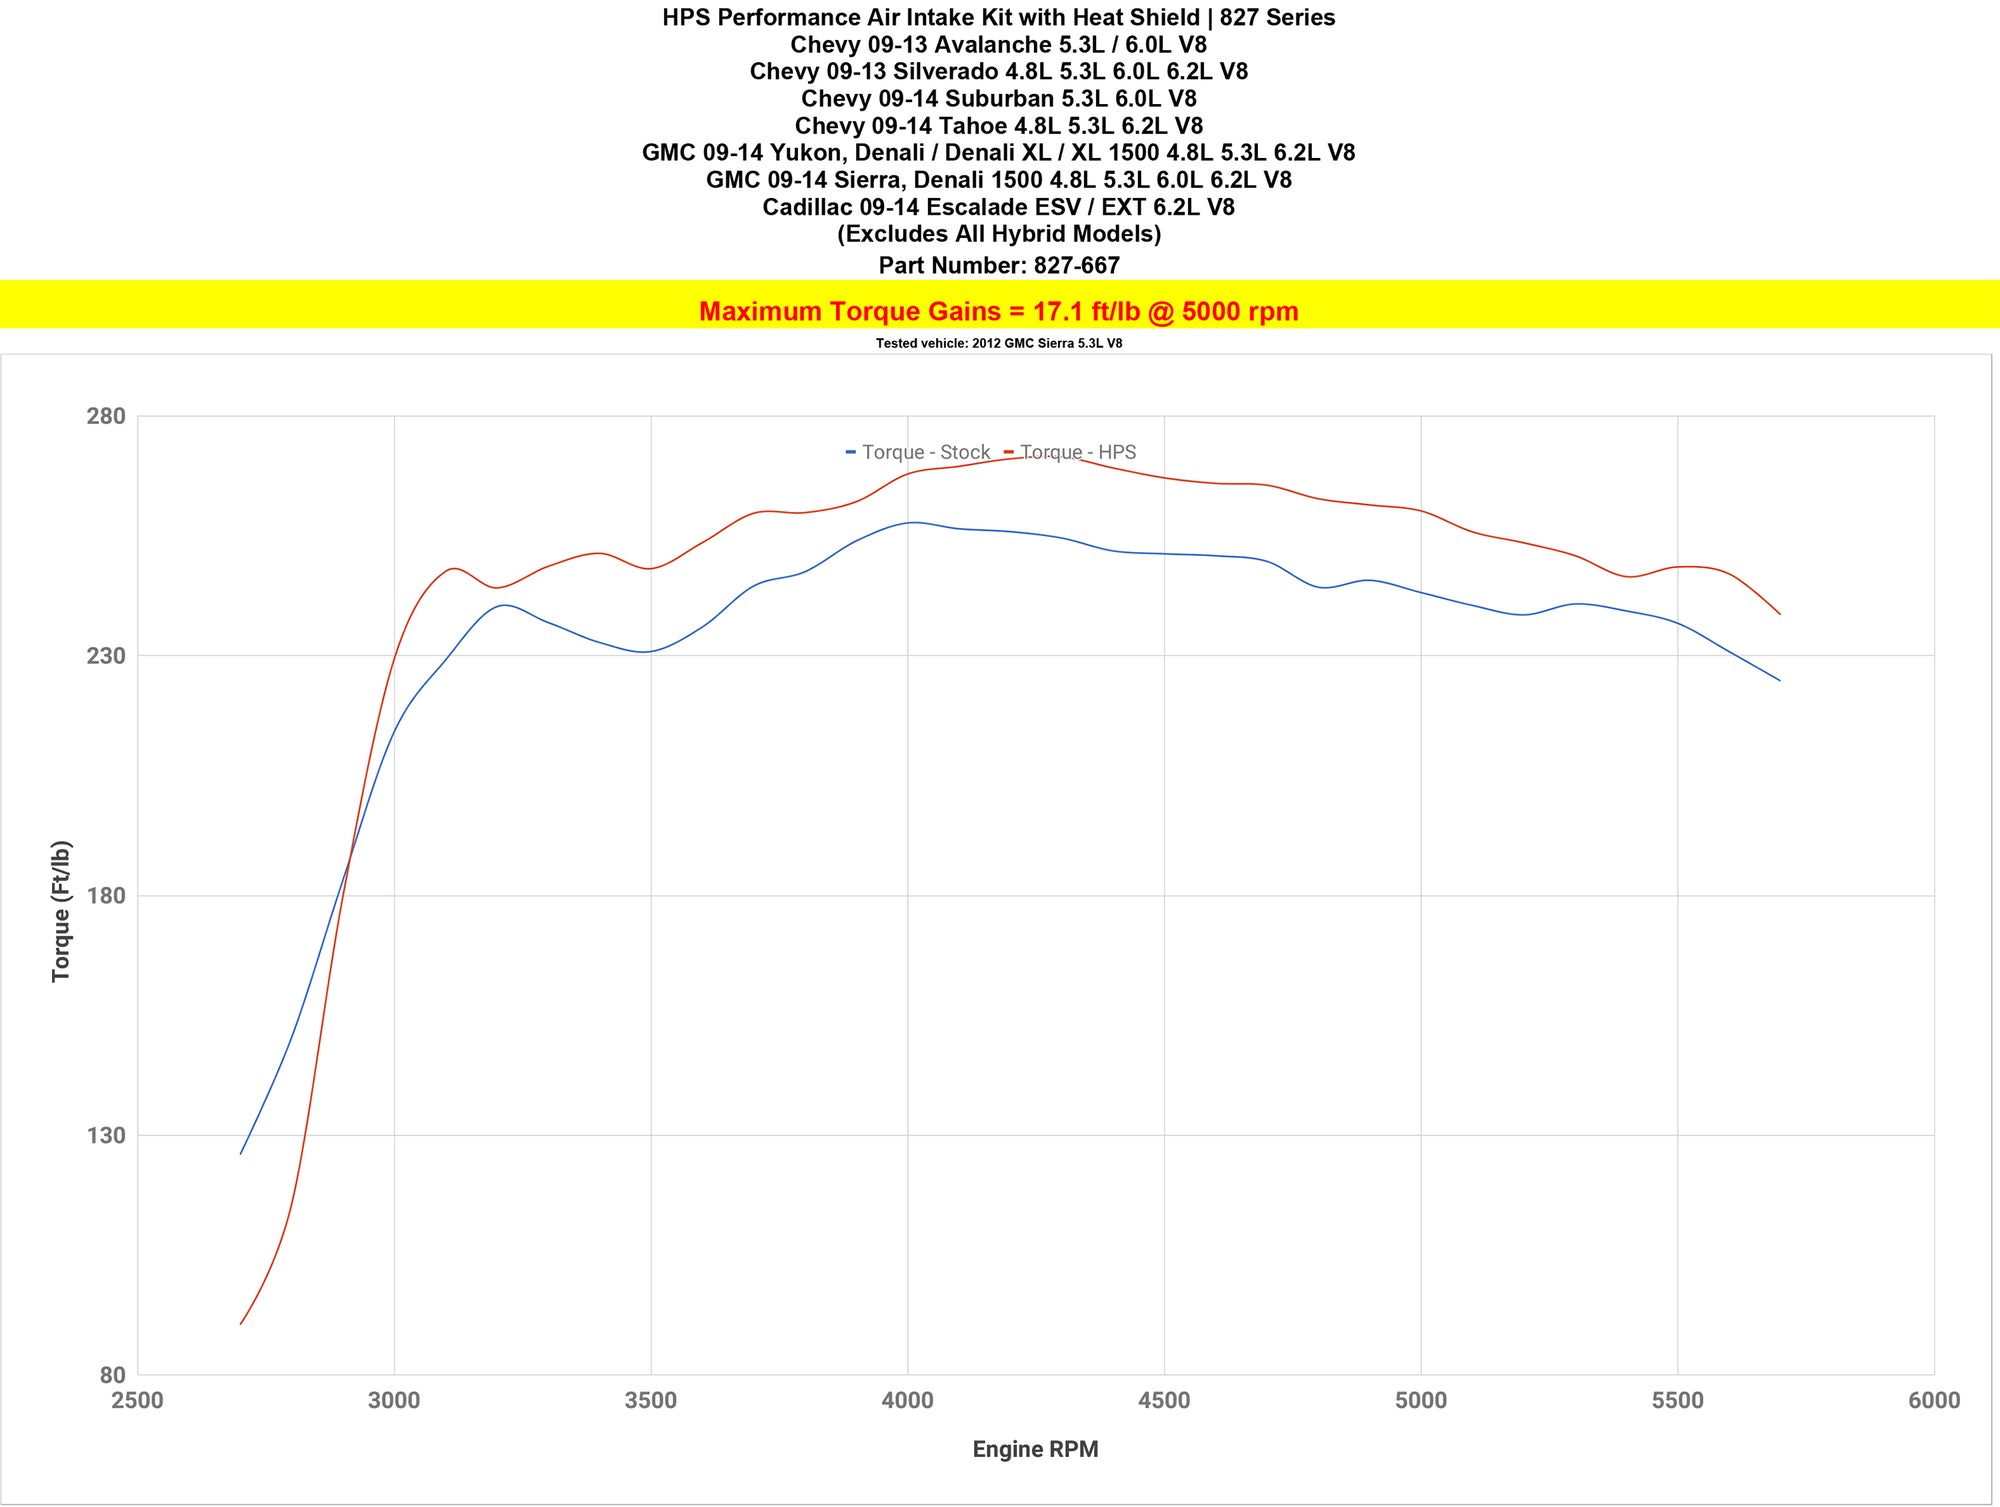 Dyno proven gains 17.1 ft/lb HPS Performance Shortram Air Intake Kit 2009-2014 GMC Sierra 1500 4.8L 5.3L 6.0L 6.2L V8 (Excludes Hybrid) 827-667BL